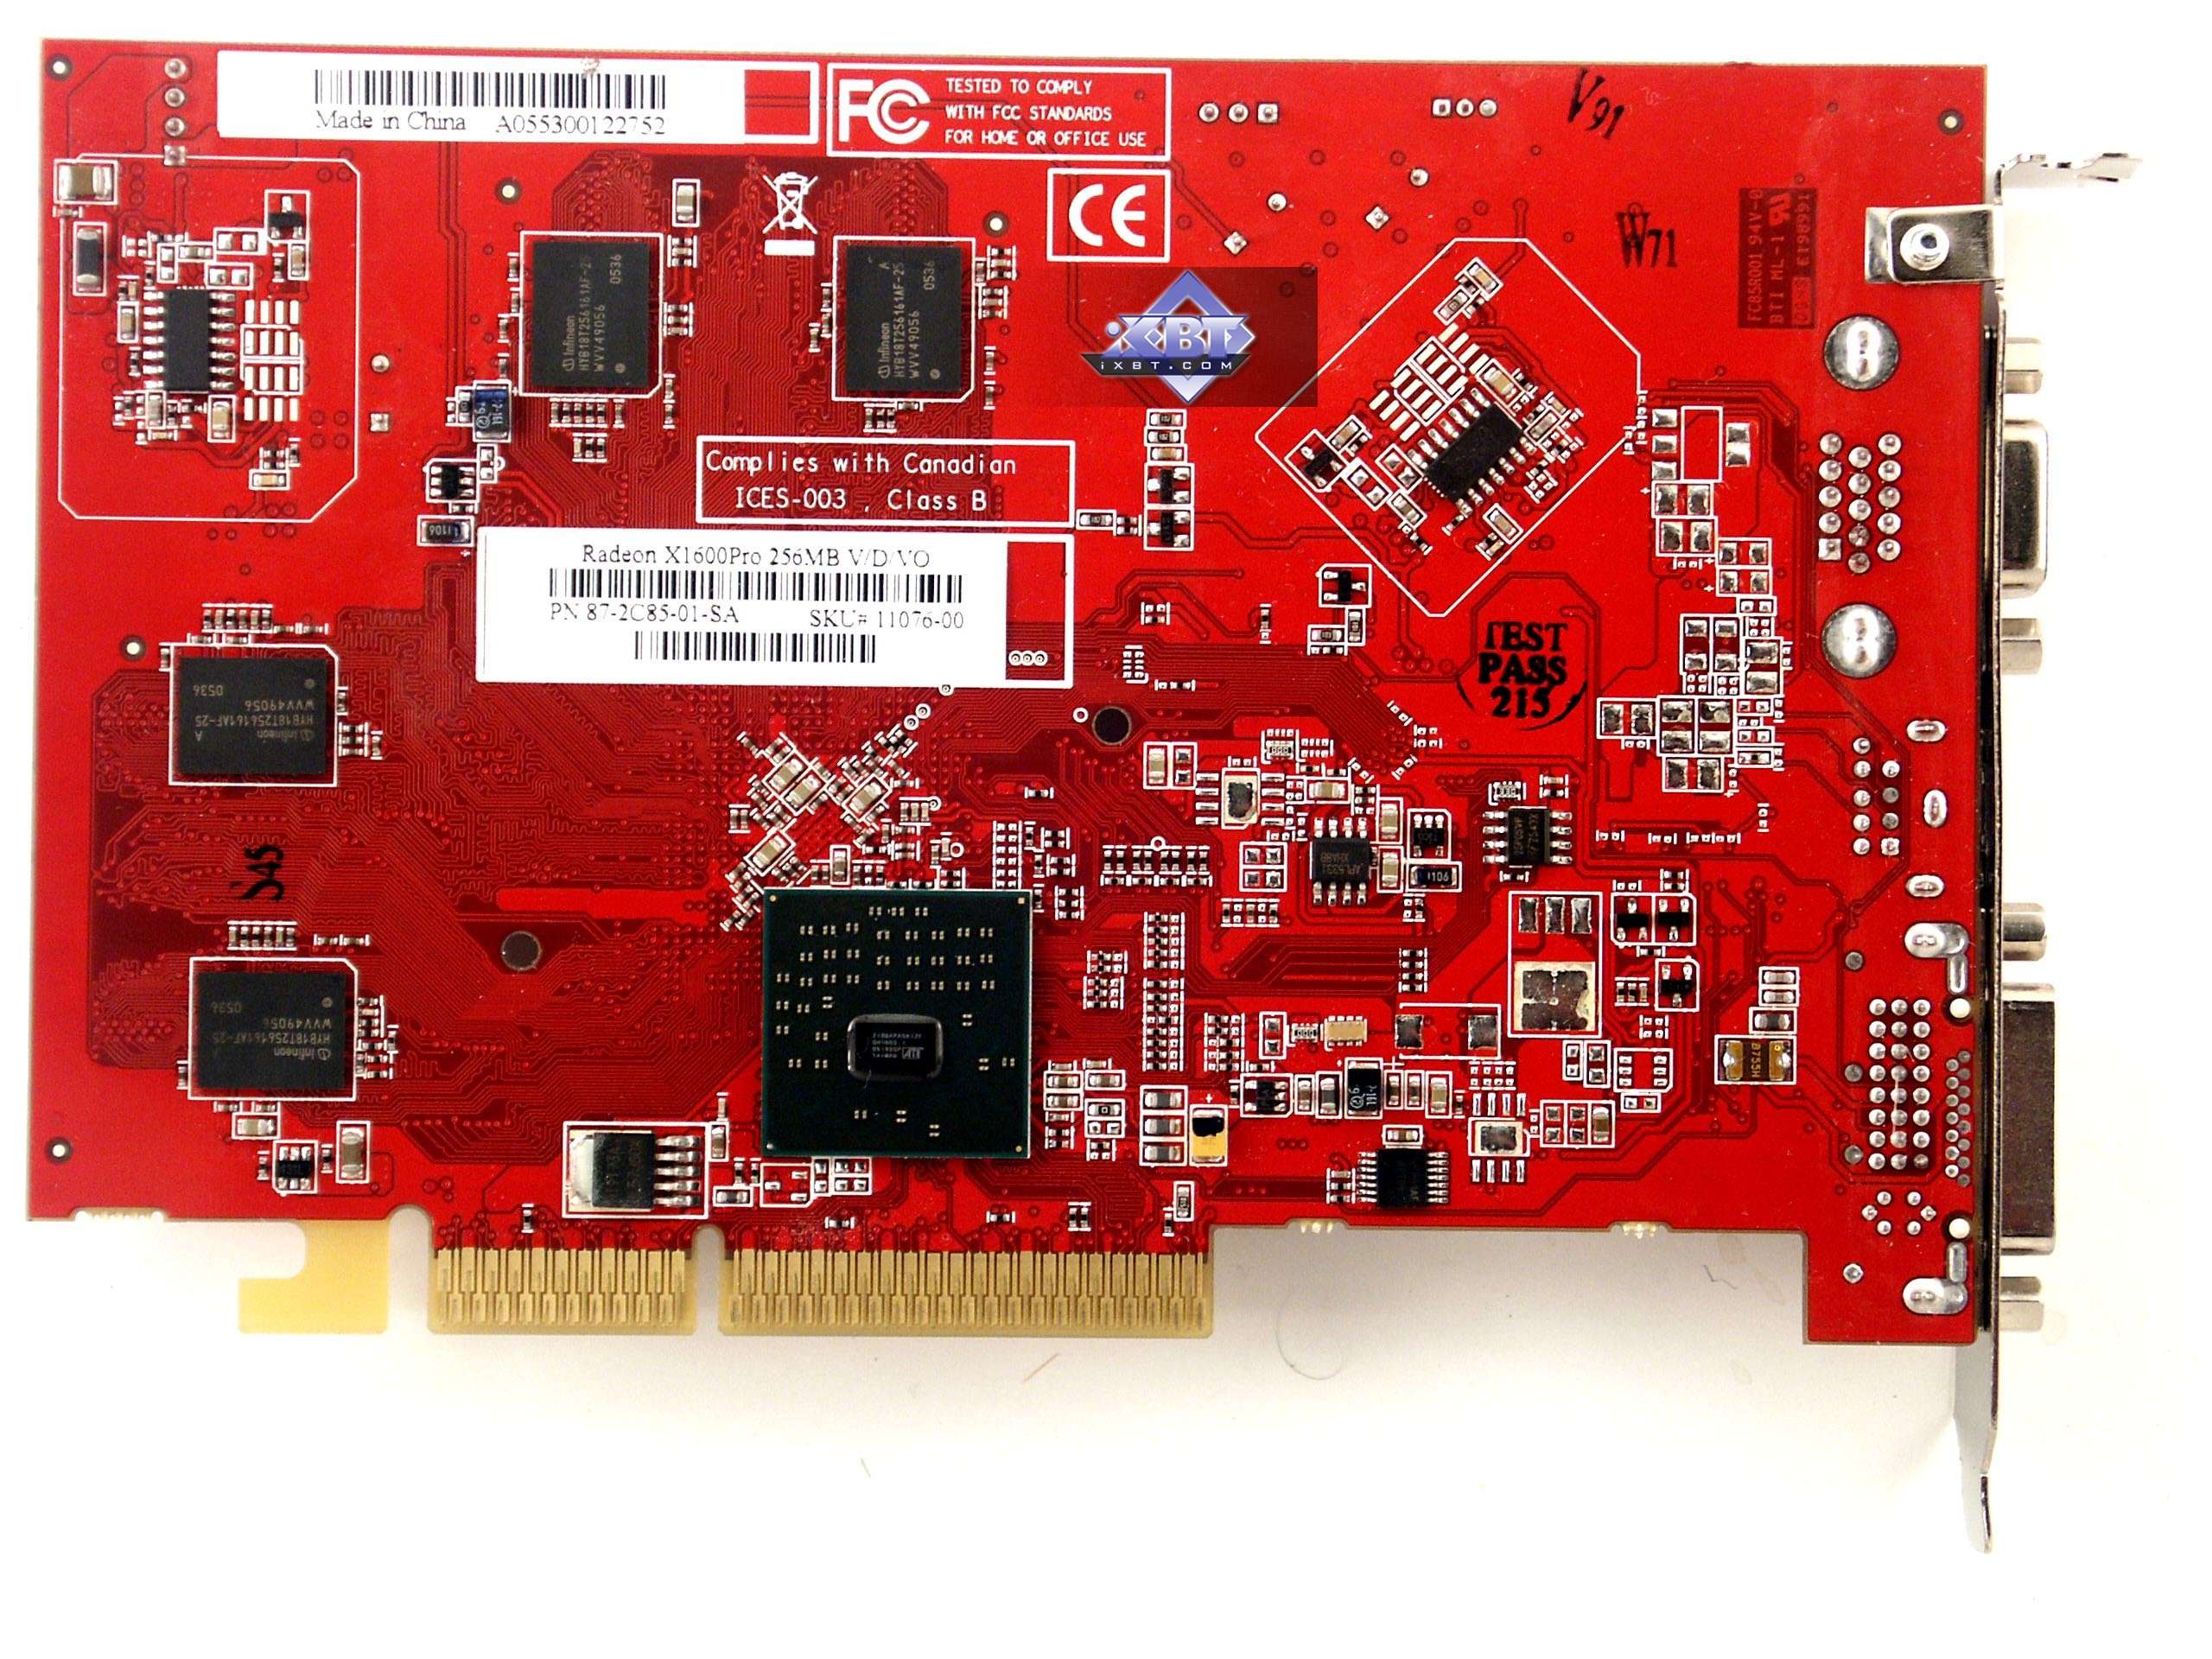 Ati radeon x1600. Radeon x1600 256mb. Видеокарта ATI Radeon x1600xt. ATI Mobility Radeon x1600 (m56). Sapphire Radeon x1600 Pro.